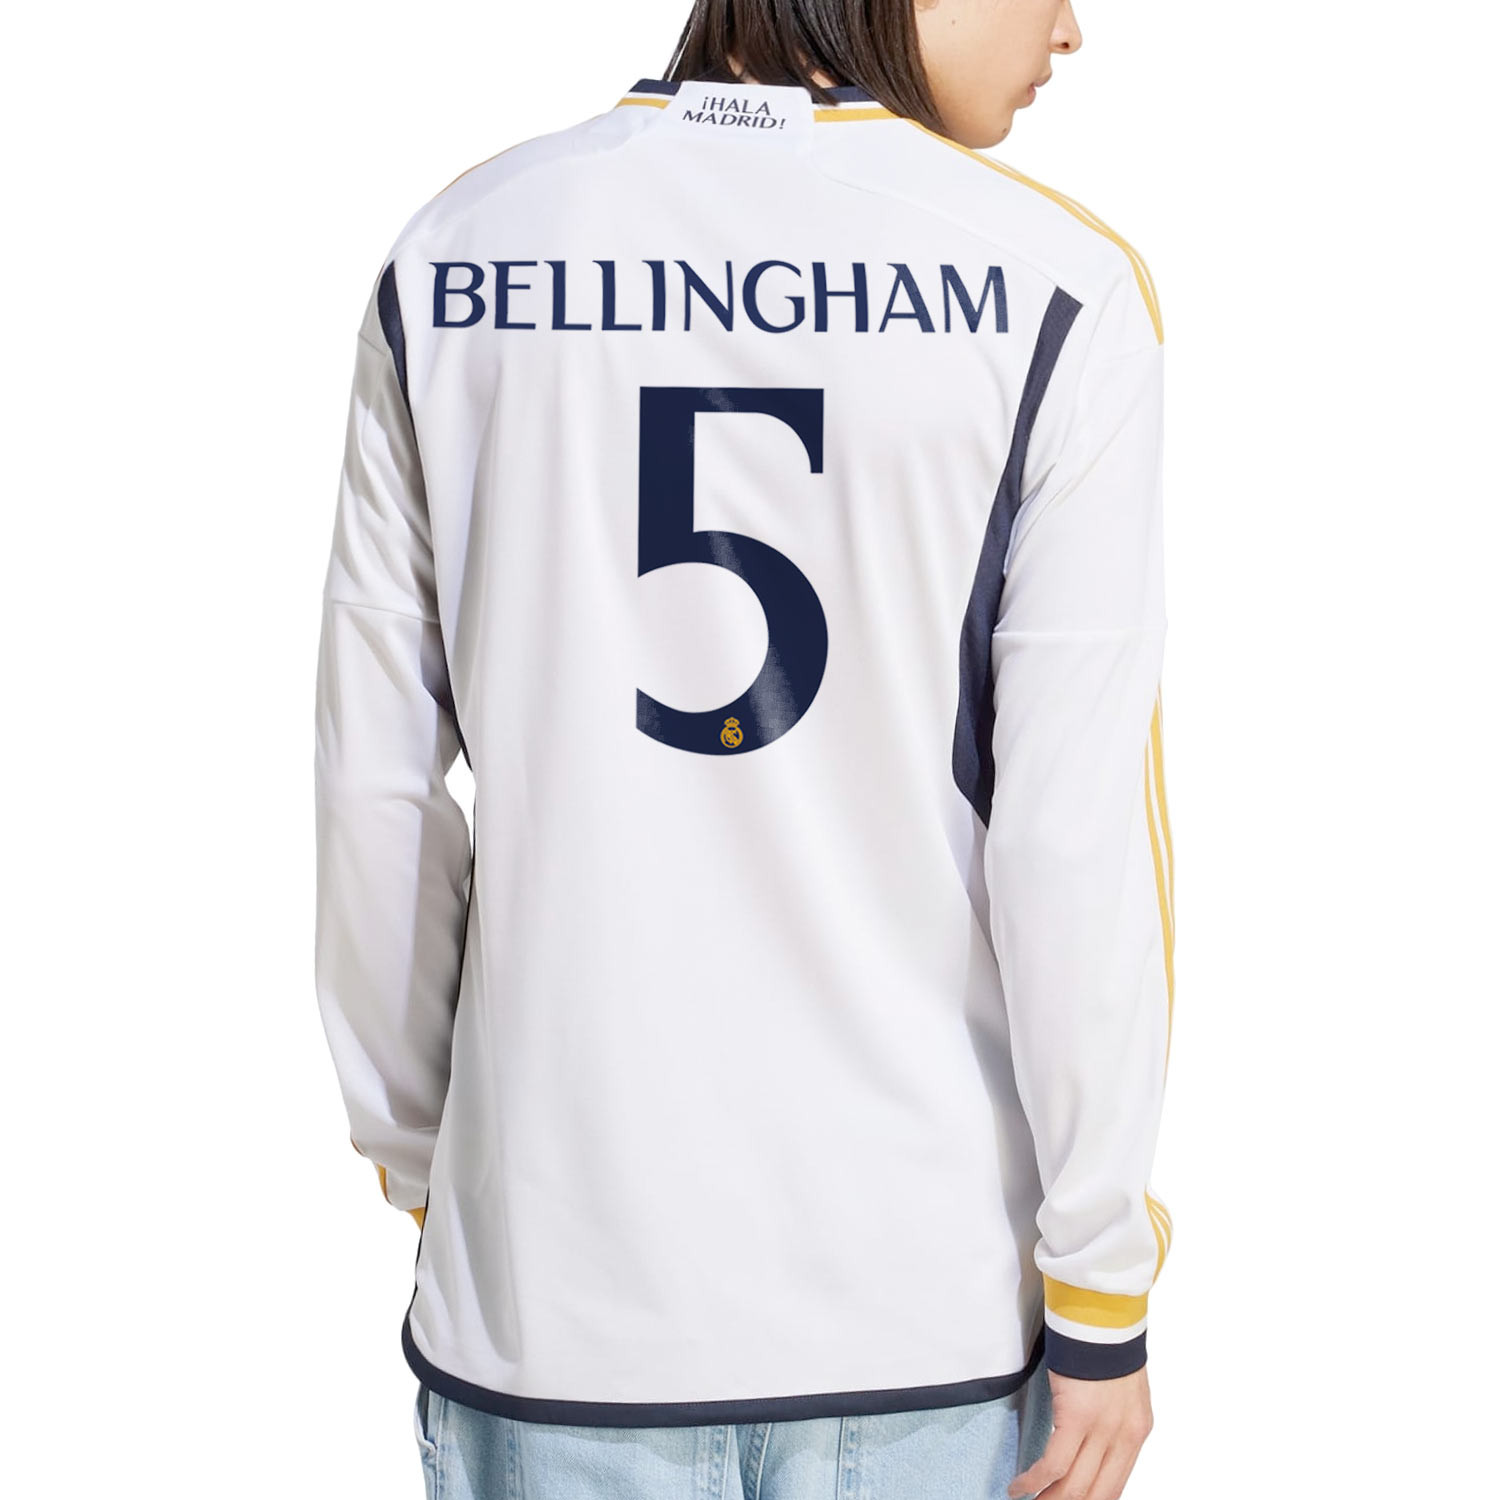 Camiseta adidas Real Madrid Bellingham 2023 2024 blanca